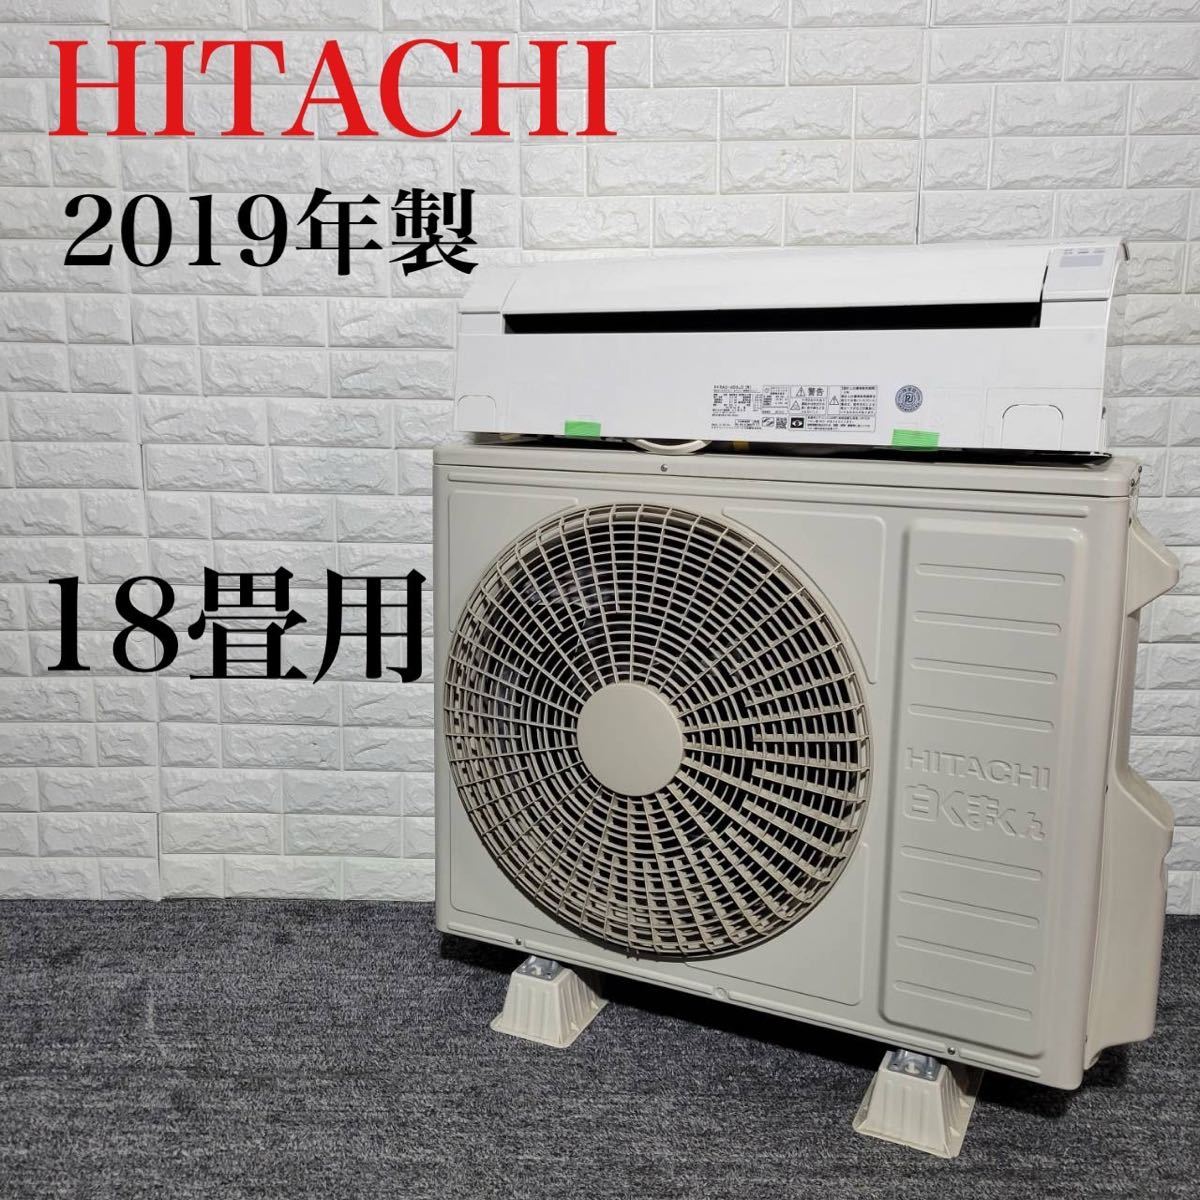 HITACHI エアコン RAS-G56J2 (W) 18畳用 2019年製 M0909